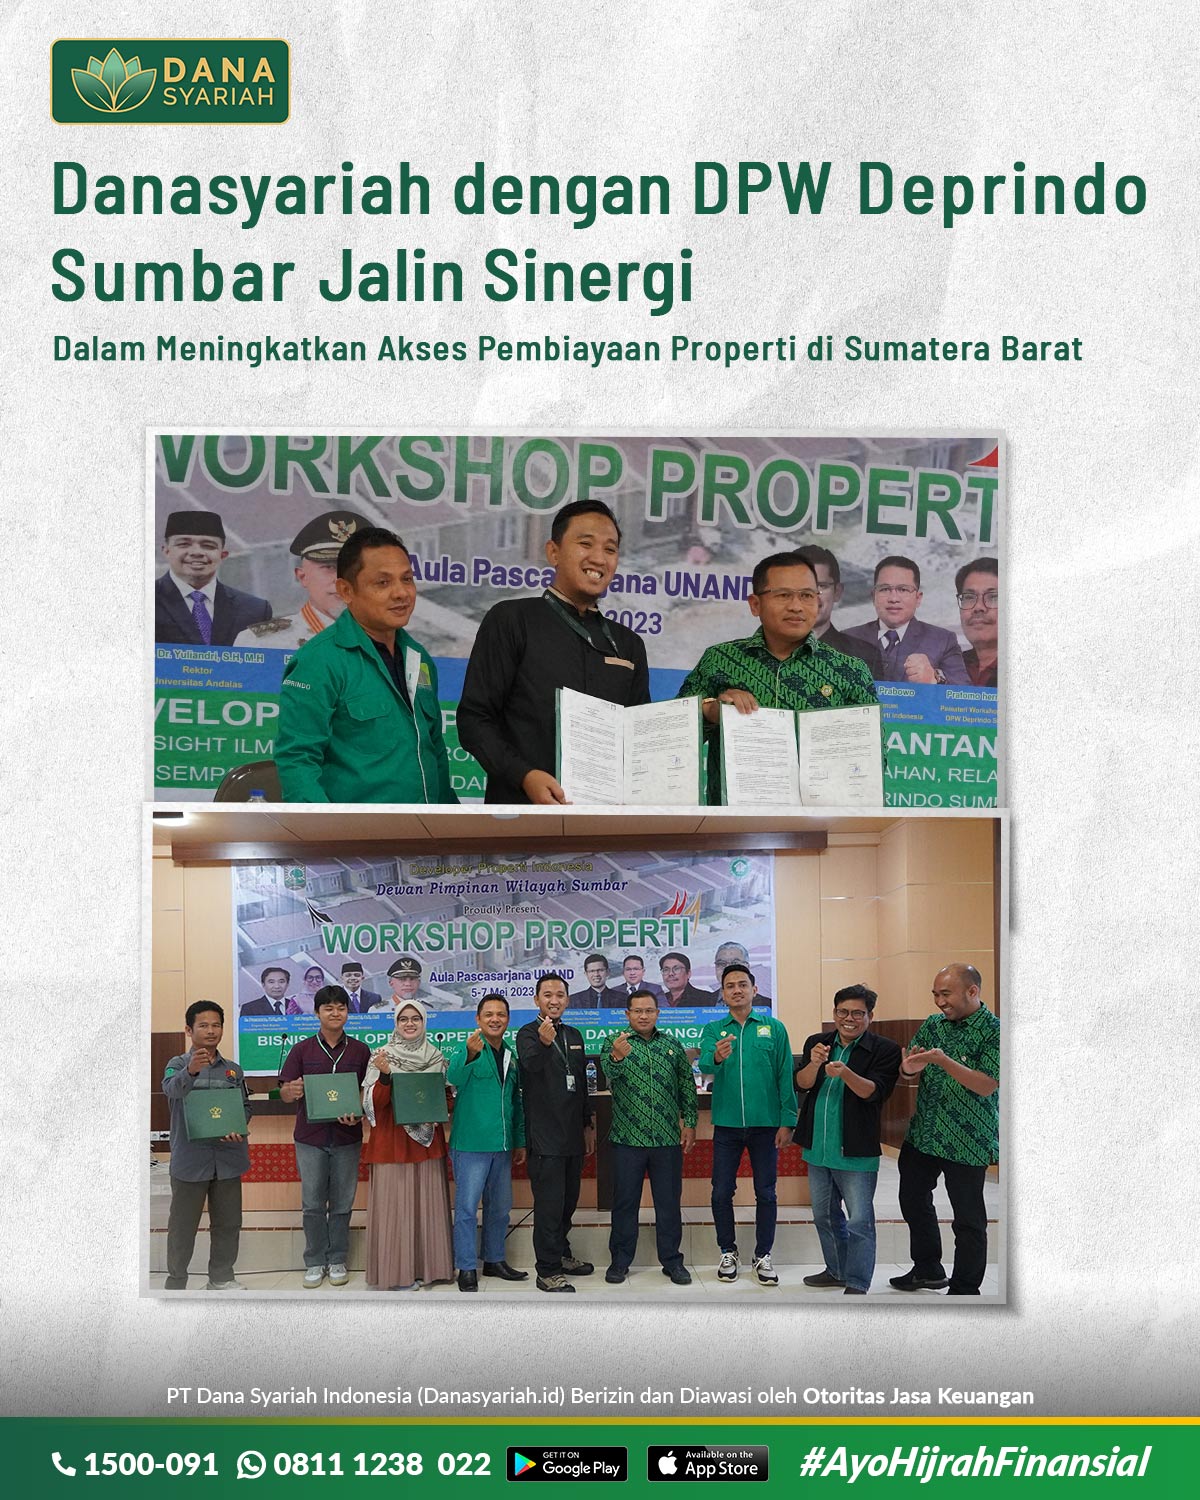 Dana Syariah Danasyariah dengan DPW Deprindo Sumbar Jalin Sinergi Dalam Meningkatkan Akses Pembiayaan Properti di Sumatera Barat